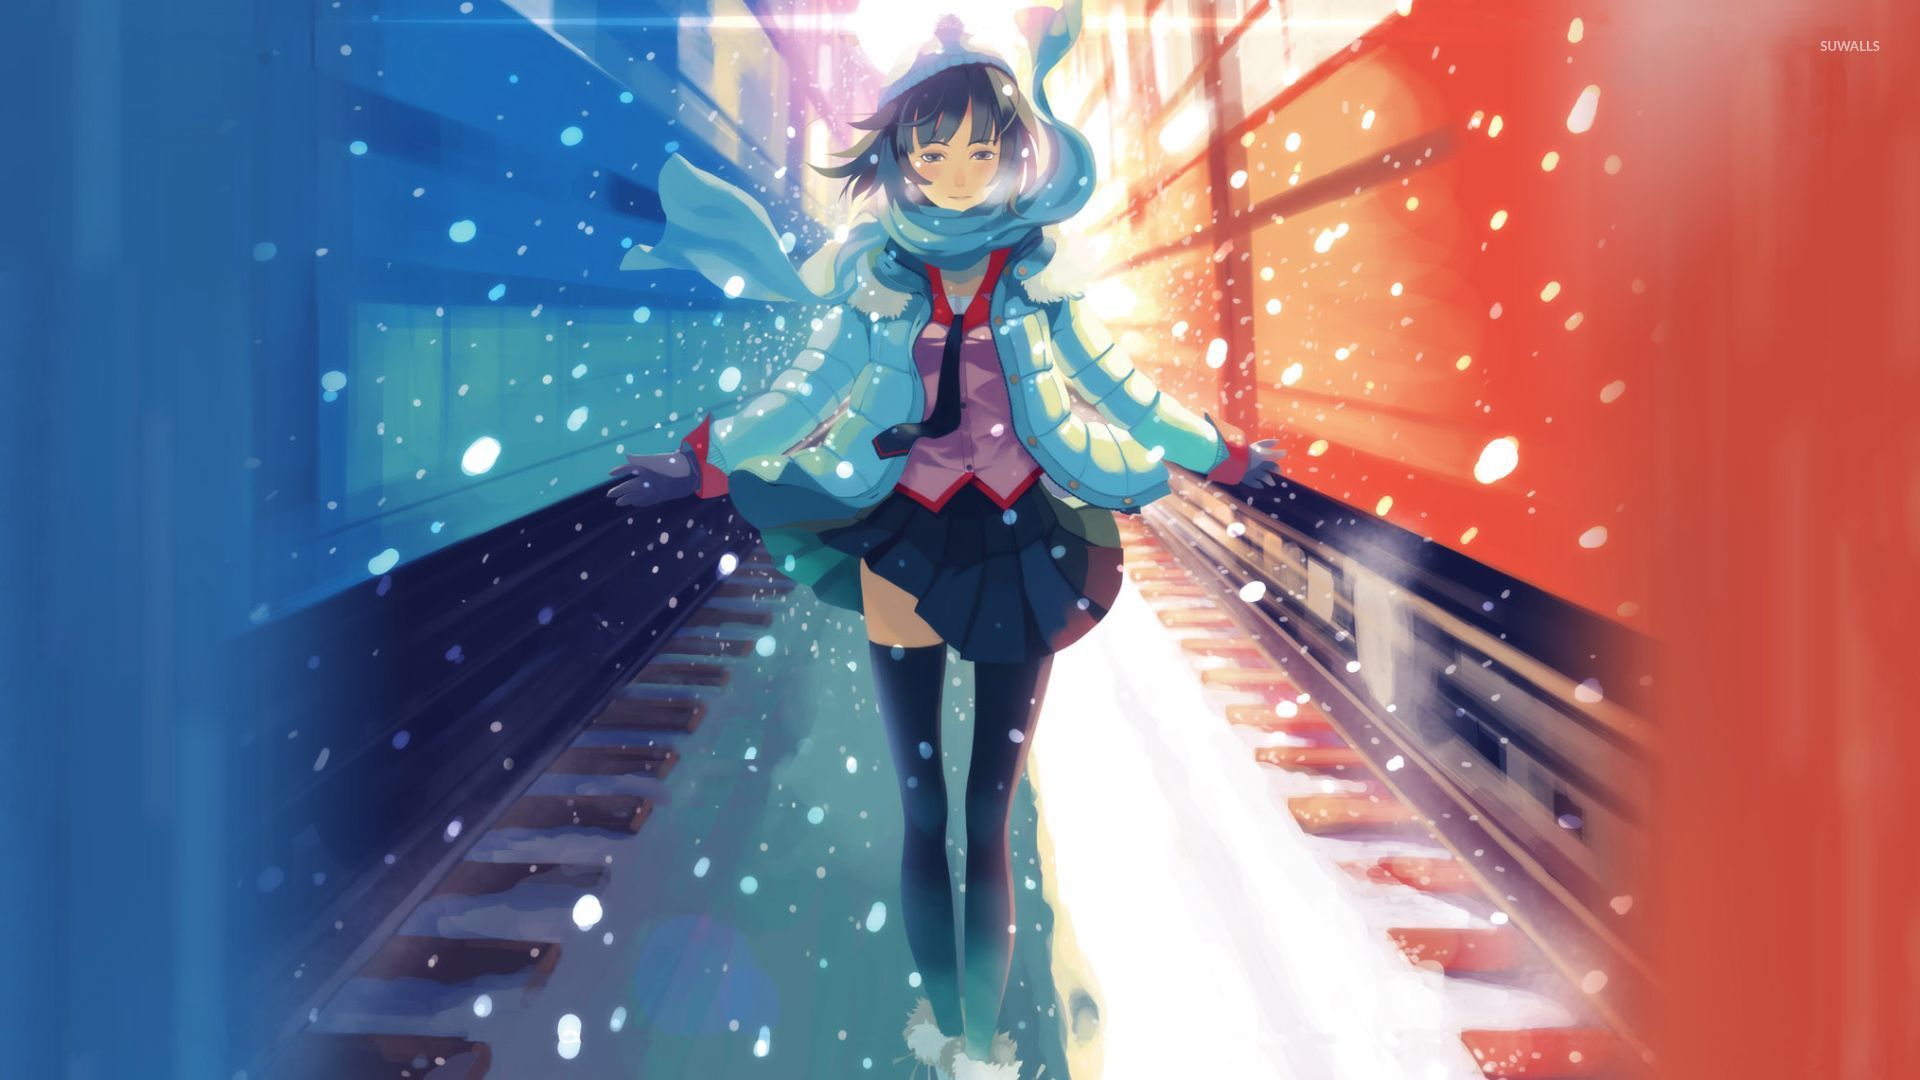 Snow Anime Wallpaper. Anime Wallpaper, Beautiful Anime Wallpaper and Awesome Anime Wallpaper